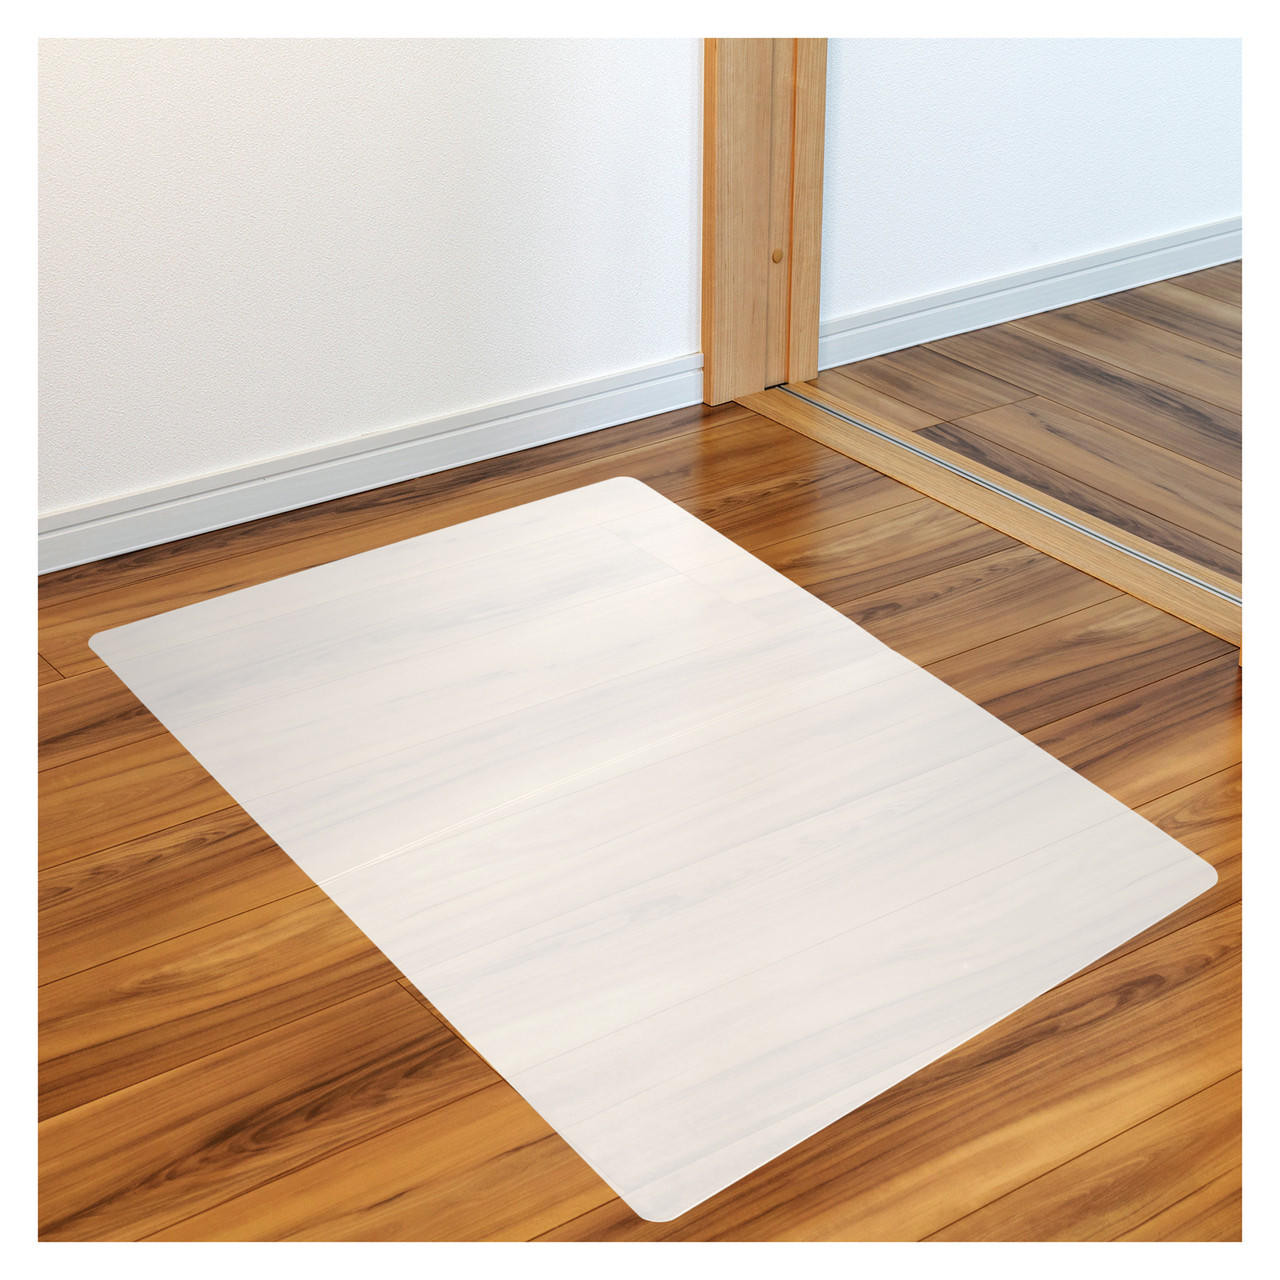 Non Slip Home Office Chair Desk Mat Floor Protector PVC Plastic Mat